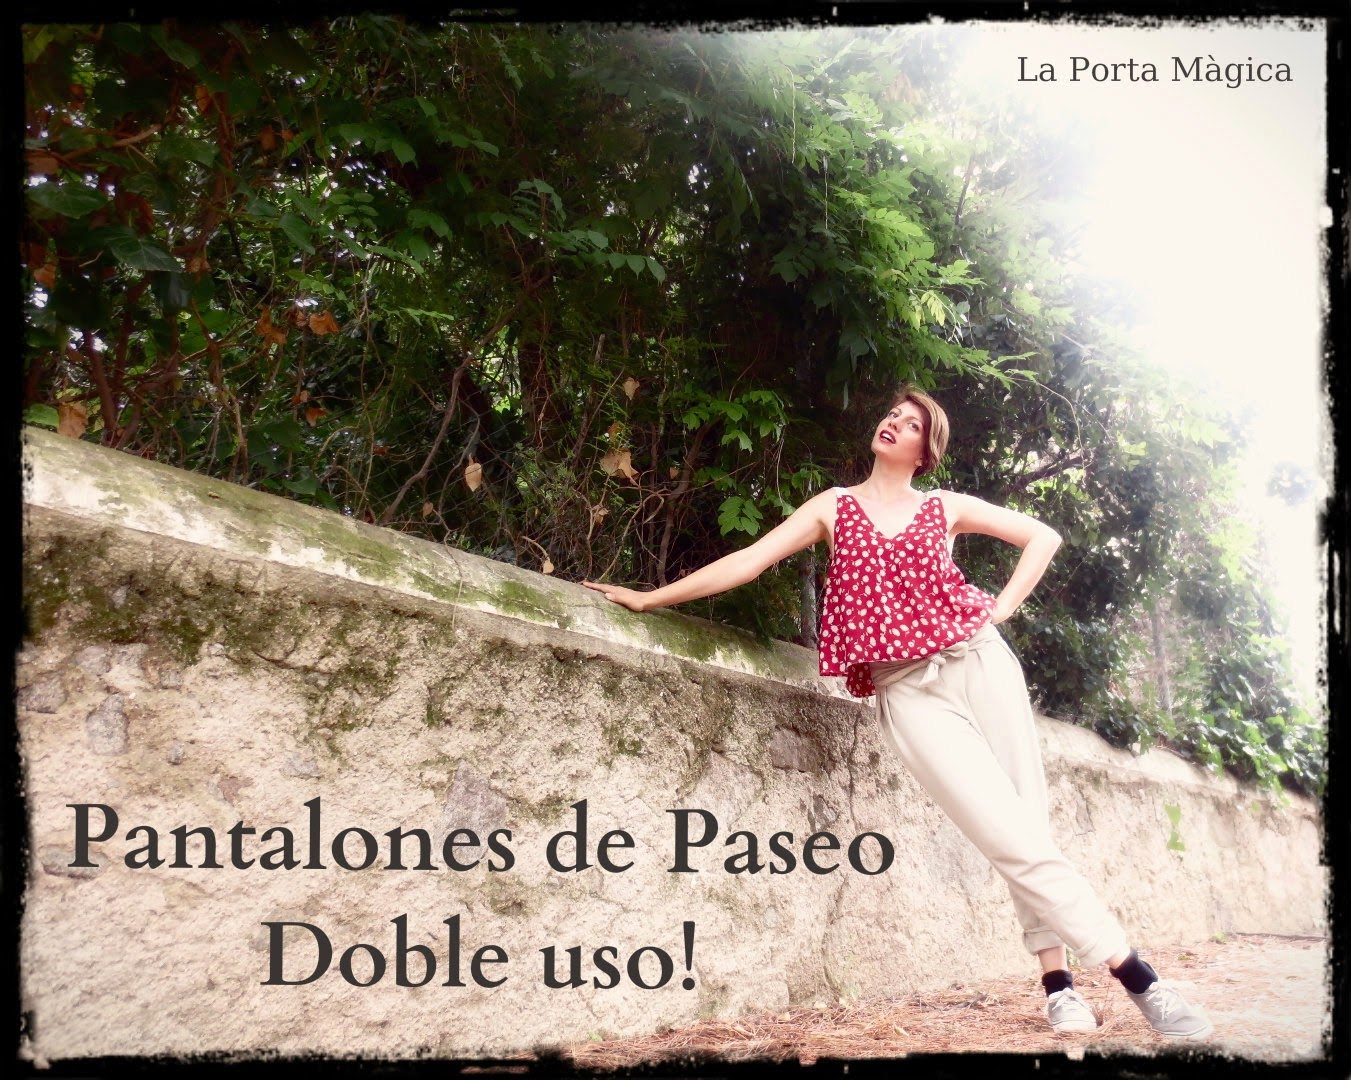 http://laportamagica.blogspot.com.es/2014/06/pantalones-de-paseo-doble-uso.html